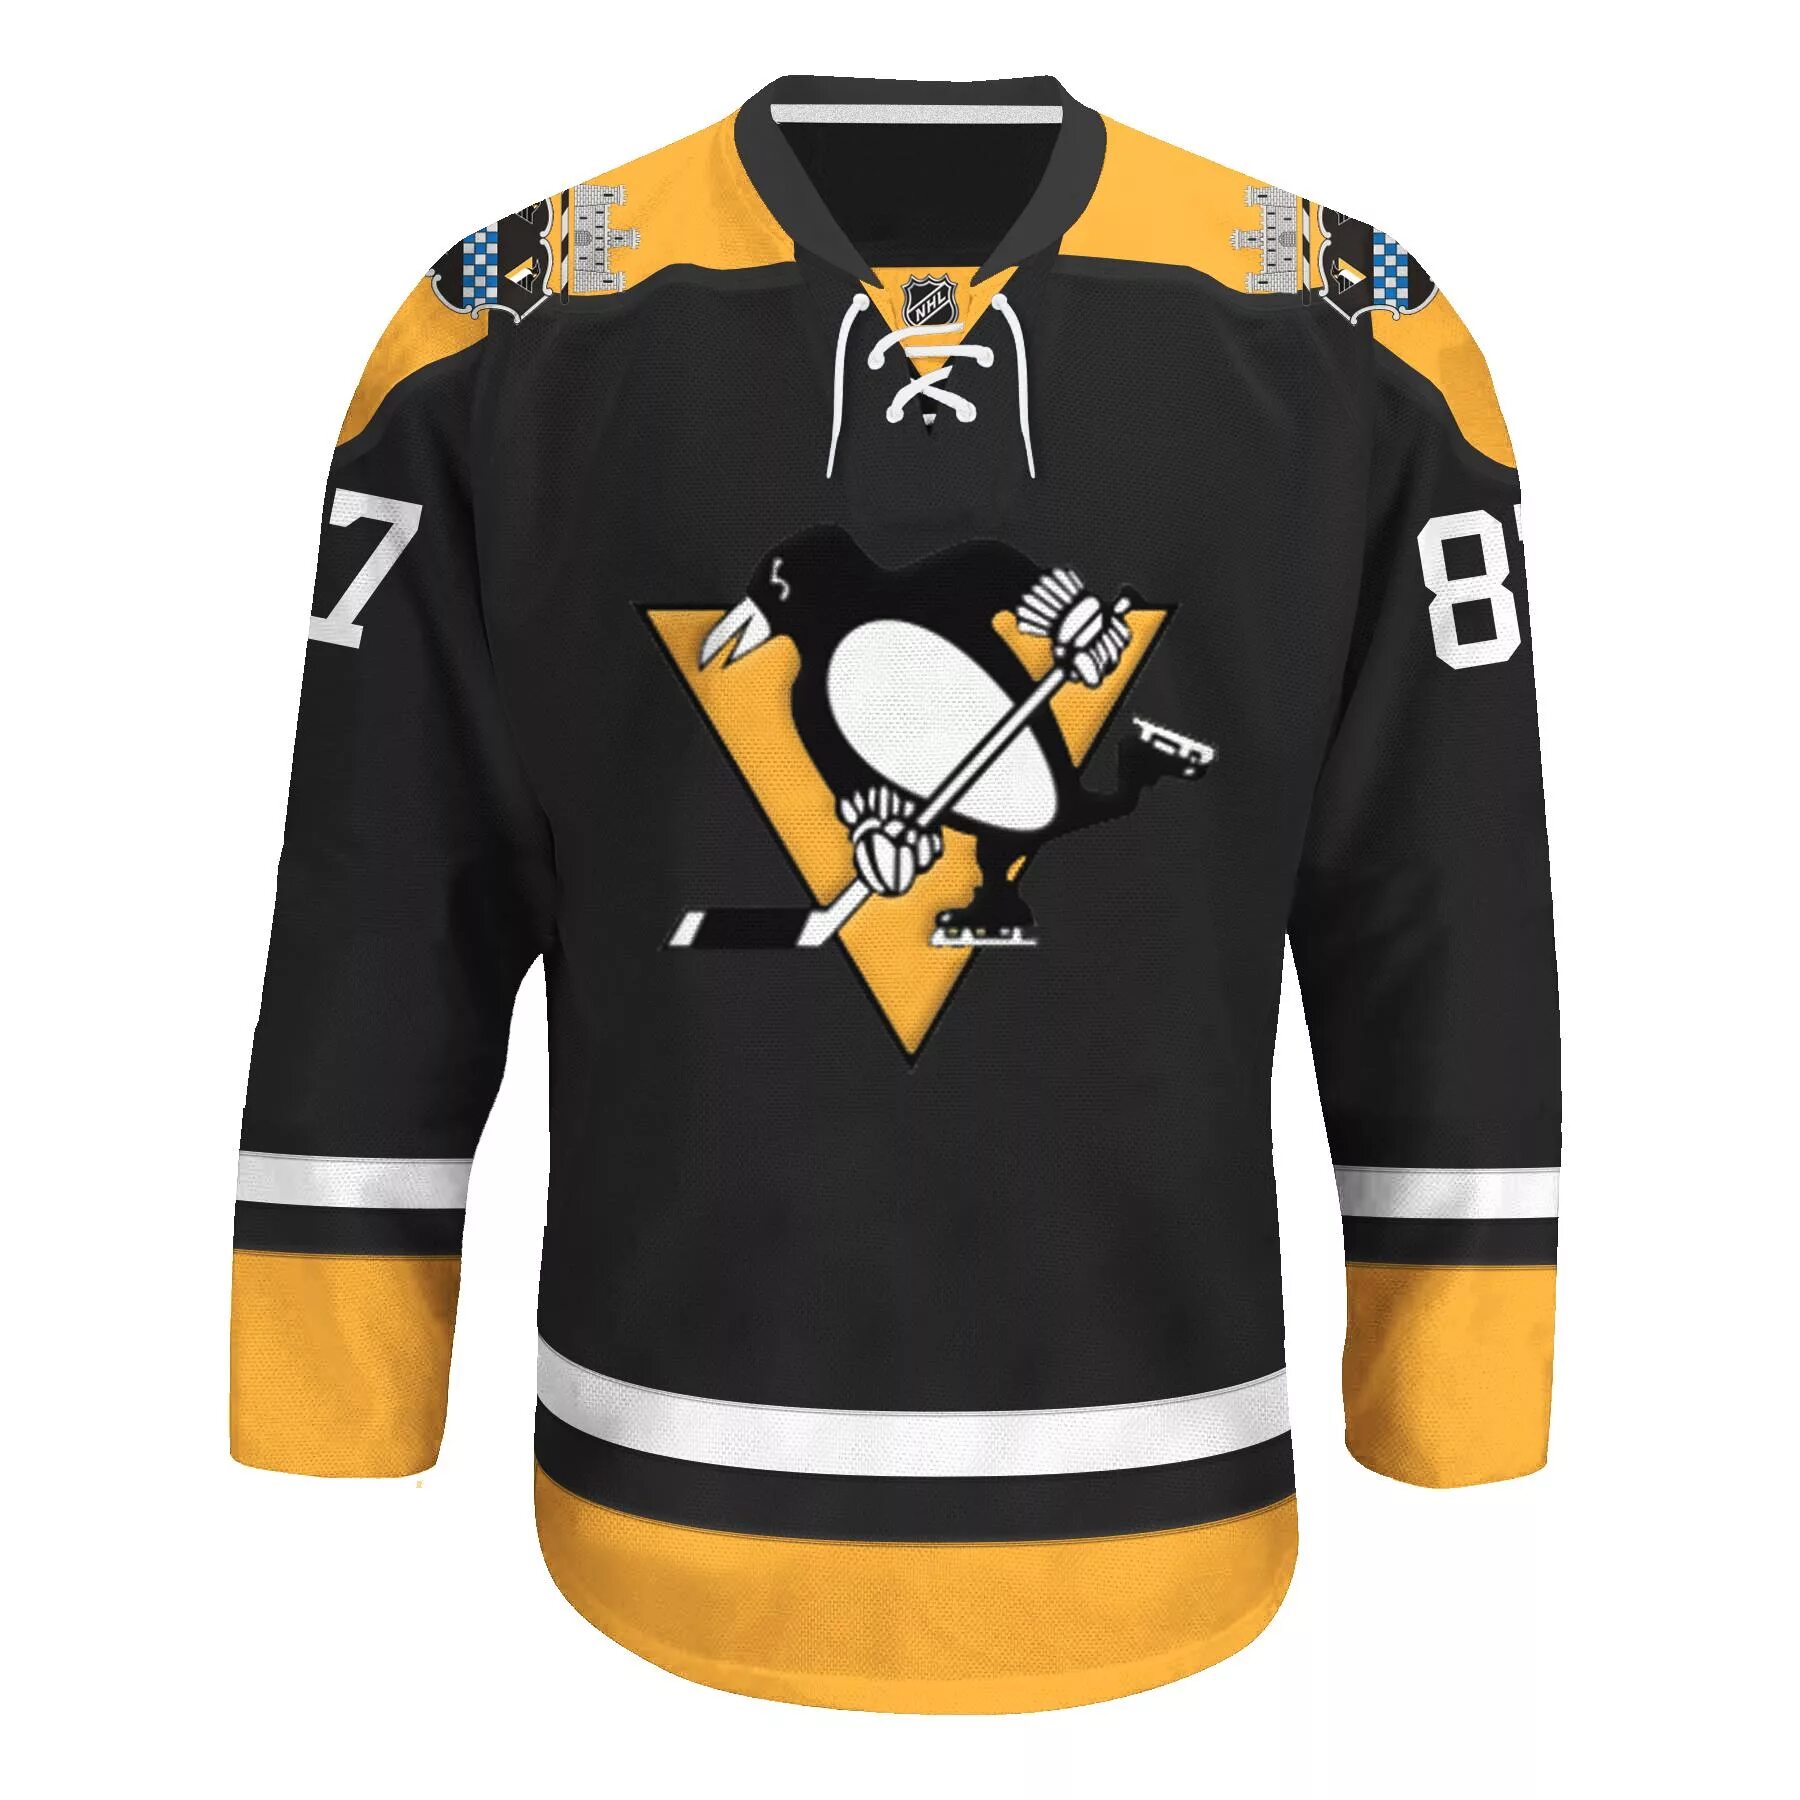 Джерси питтсбург пингвинз. Pittsburgh Penguins Mario Lemieux adidas. NHL Питтсбург джерси одежда. Adidas Pittsburgh Penguins.